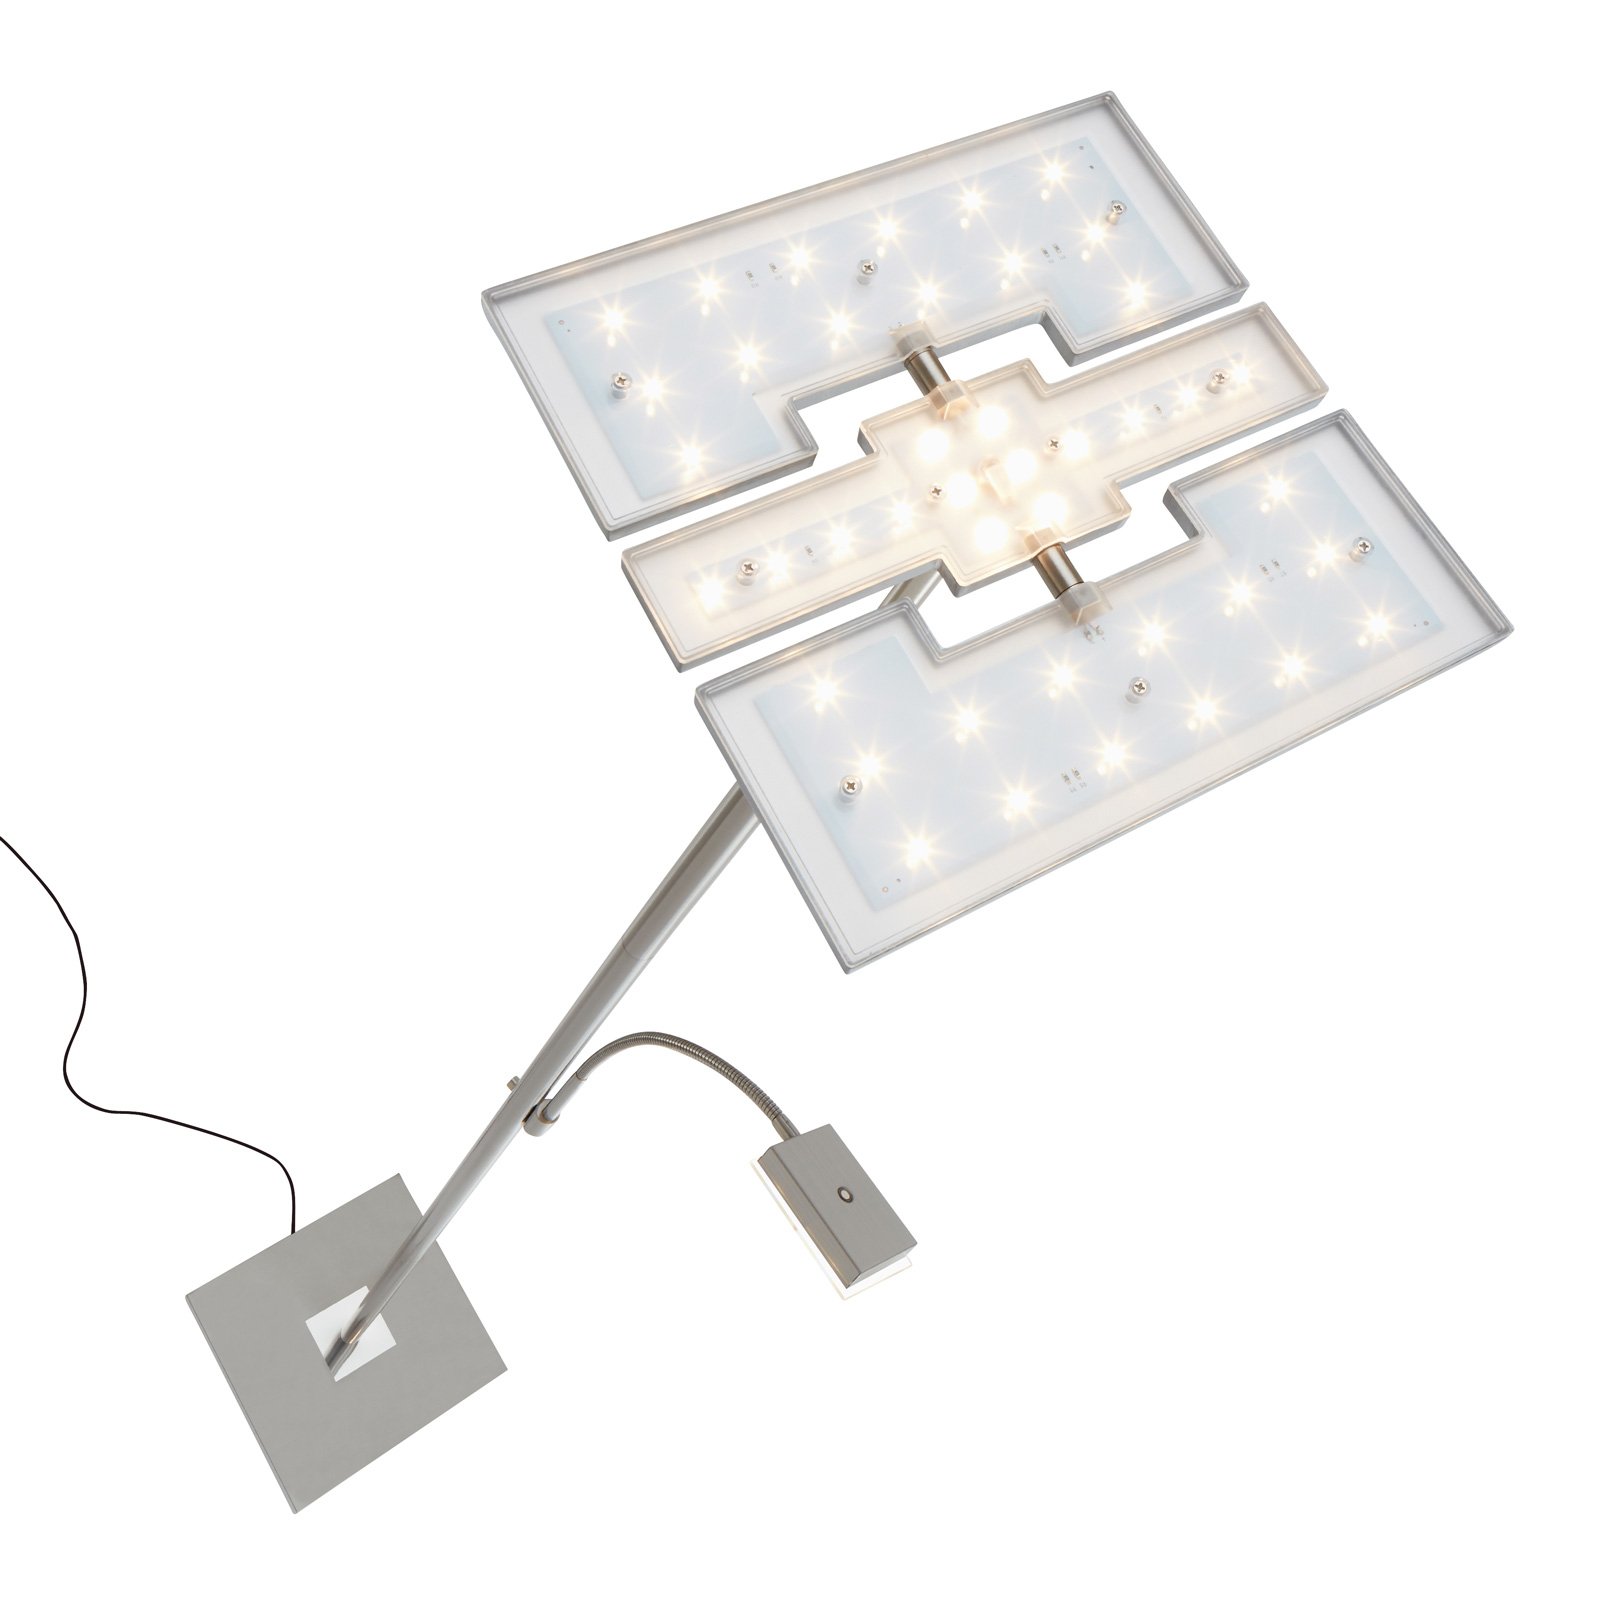 LED uplighter Floor 1328-022, angular, reading arm